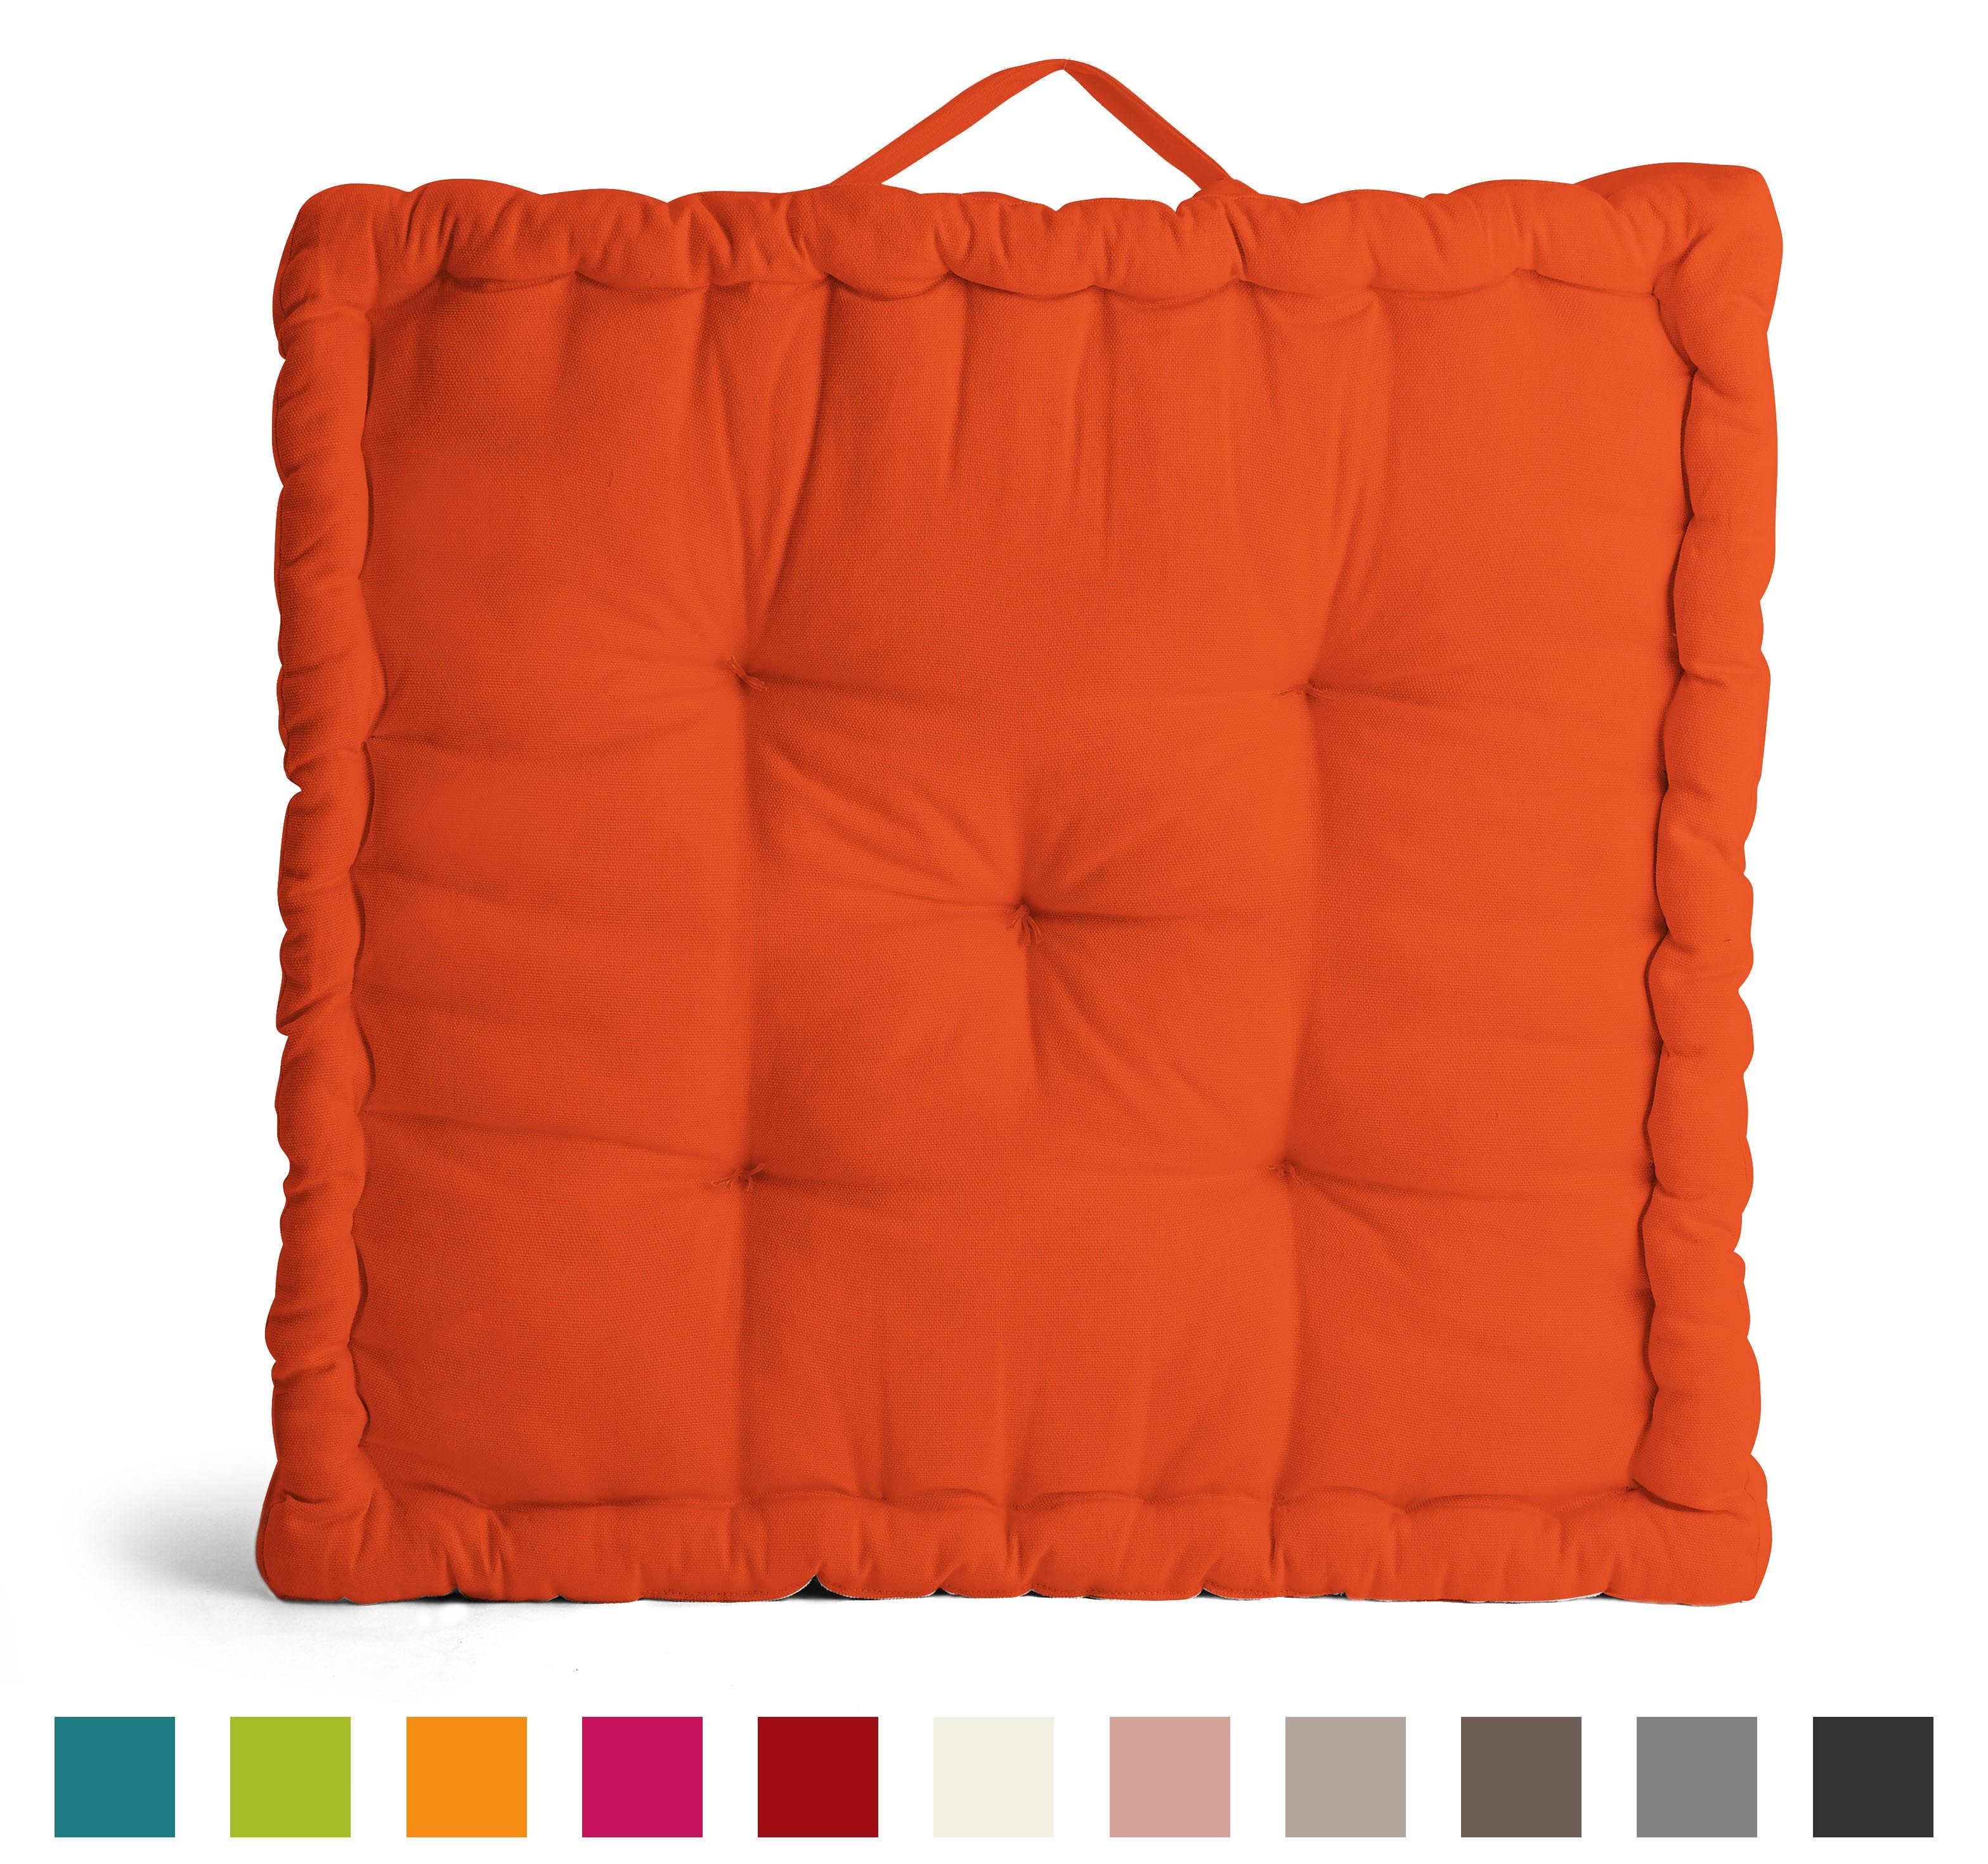 Encasa Homes Rich Cotton Canvas Floor Cushions - Choice of 11 Colours and 3 Sizes - Size 60x60x10 cm, Orange